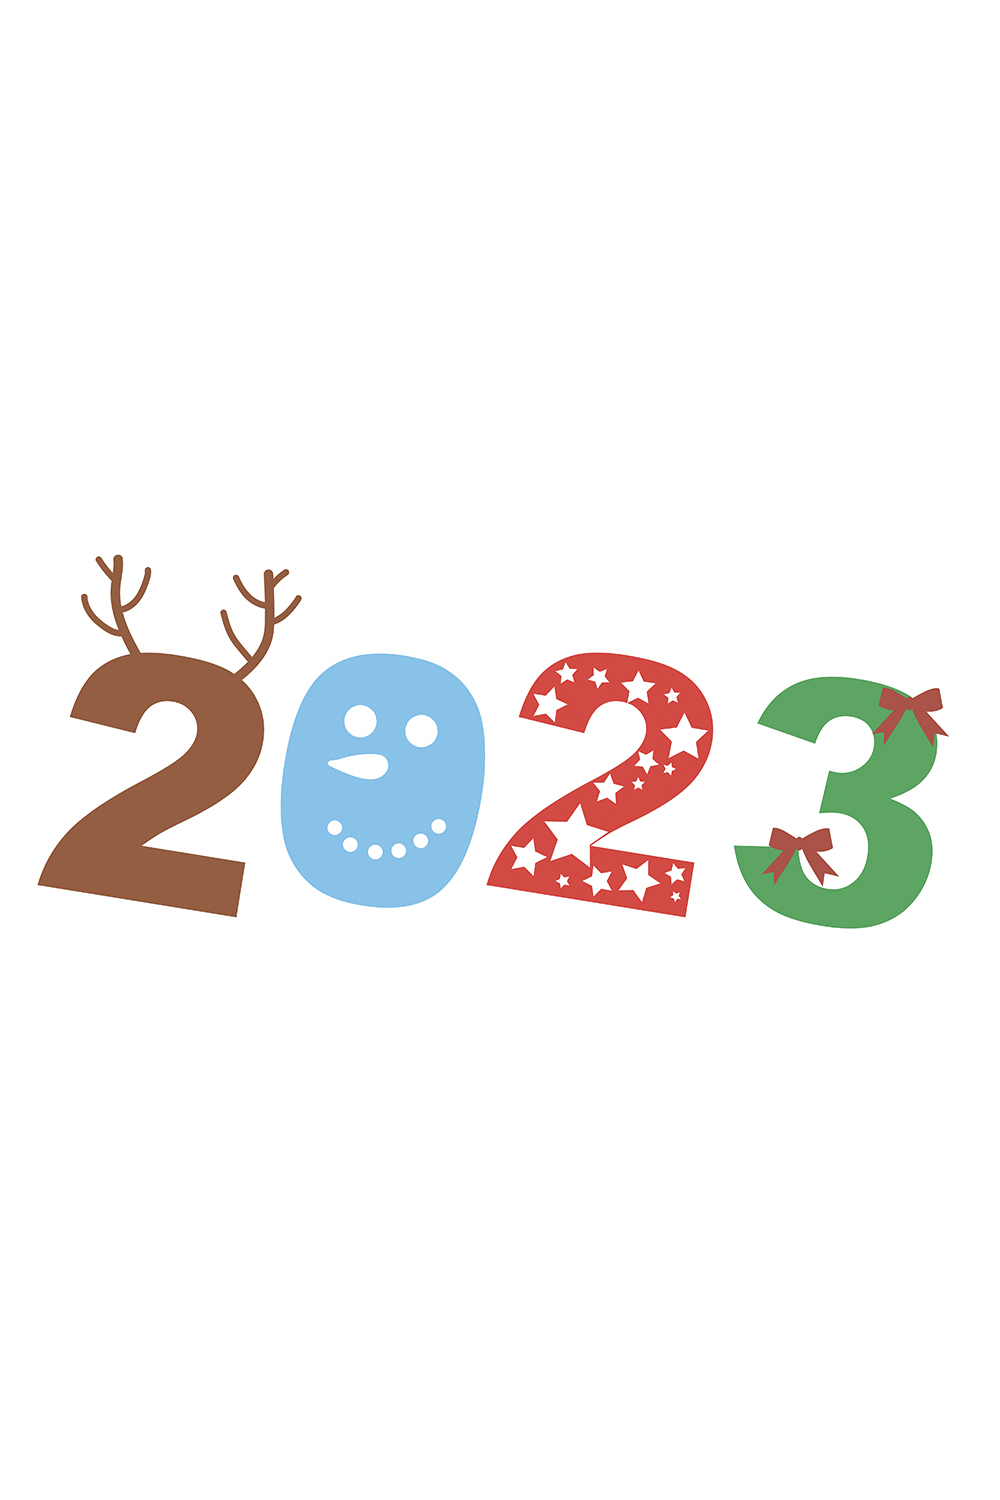 Happy New Year 2023 Logo Design pinterest image.